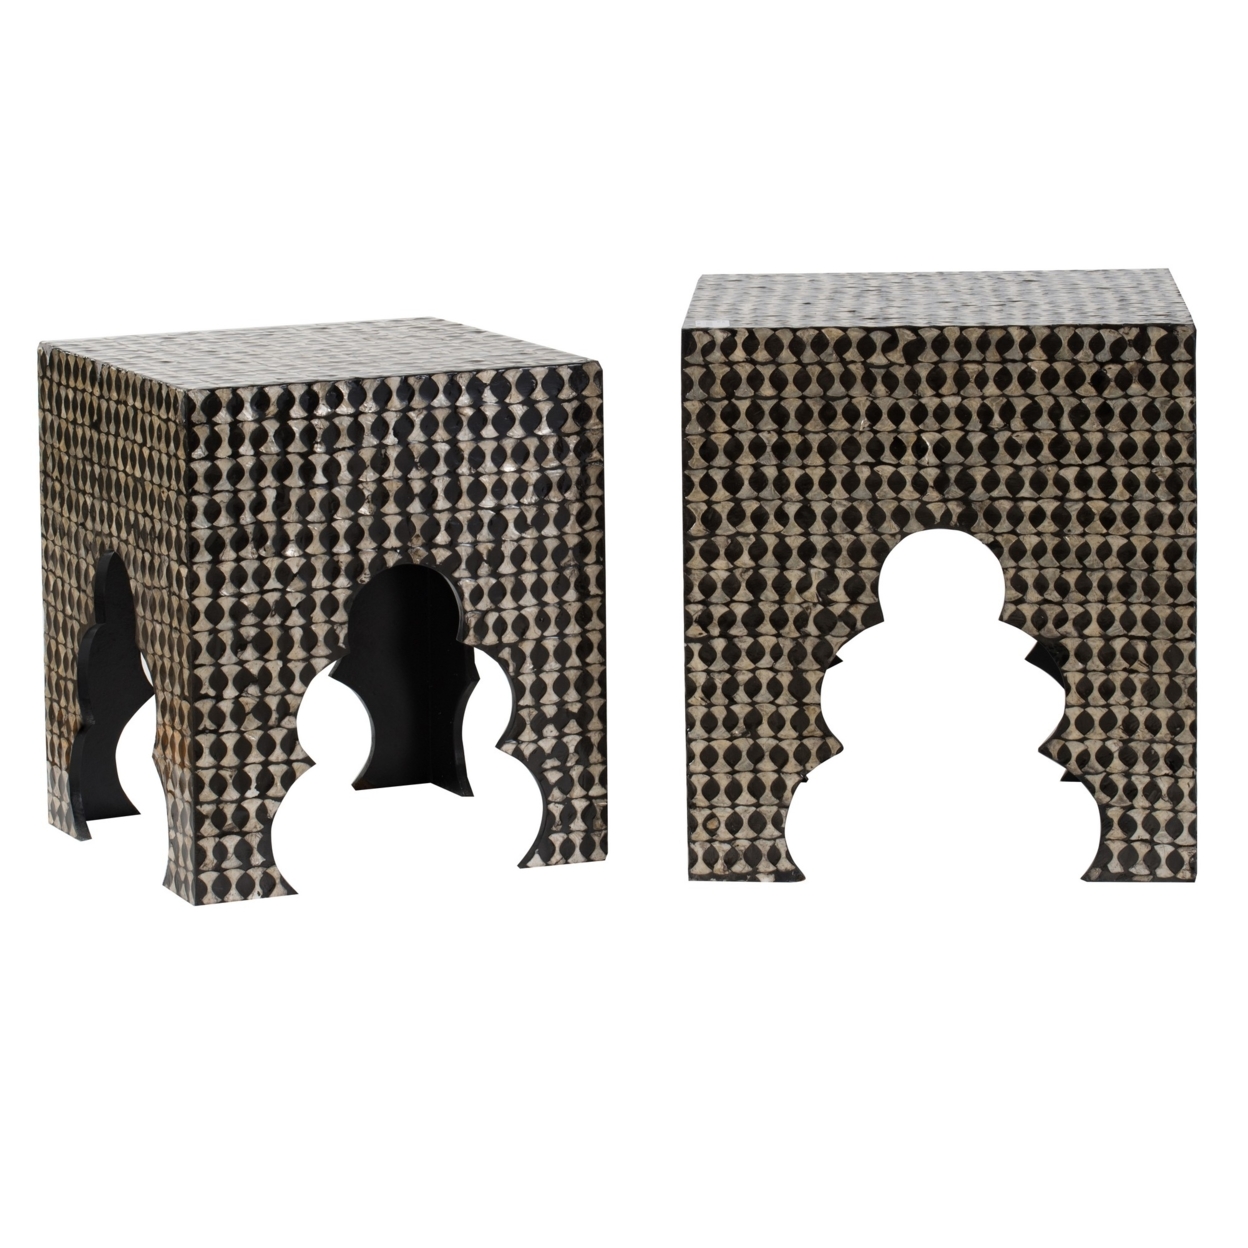 Lez 18, 20 Inch Capiz Accent Table Stool Set Of 2, Black, Pearl Mosaic Look- Saltoro Sherpi